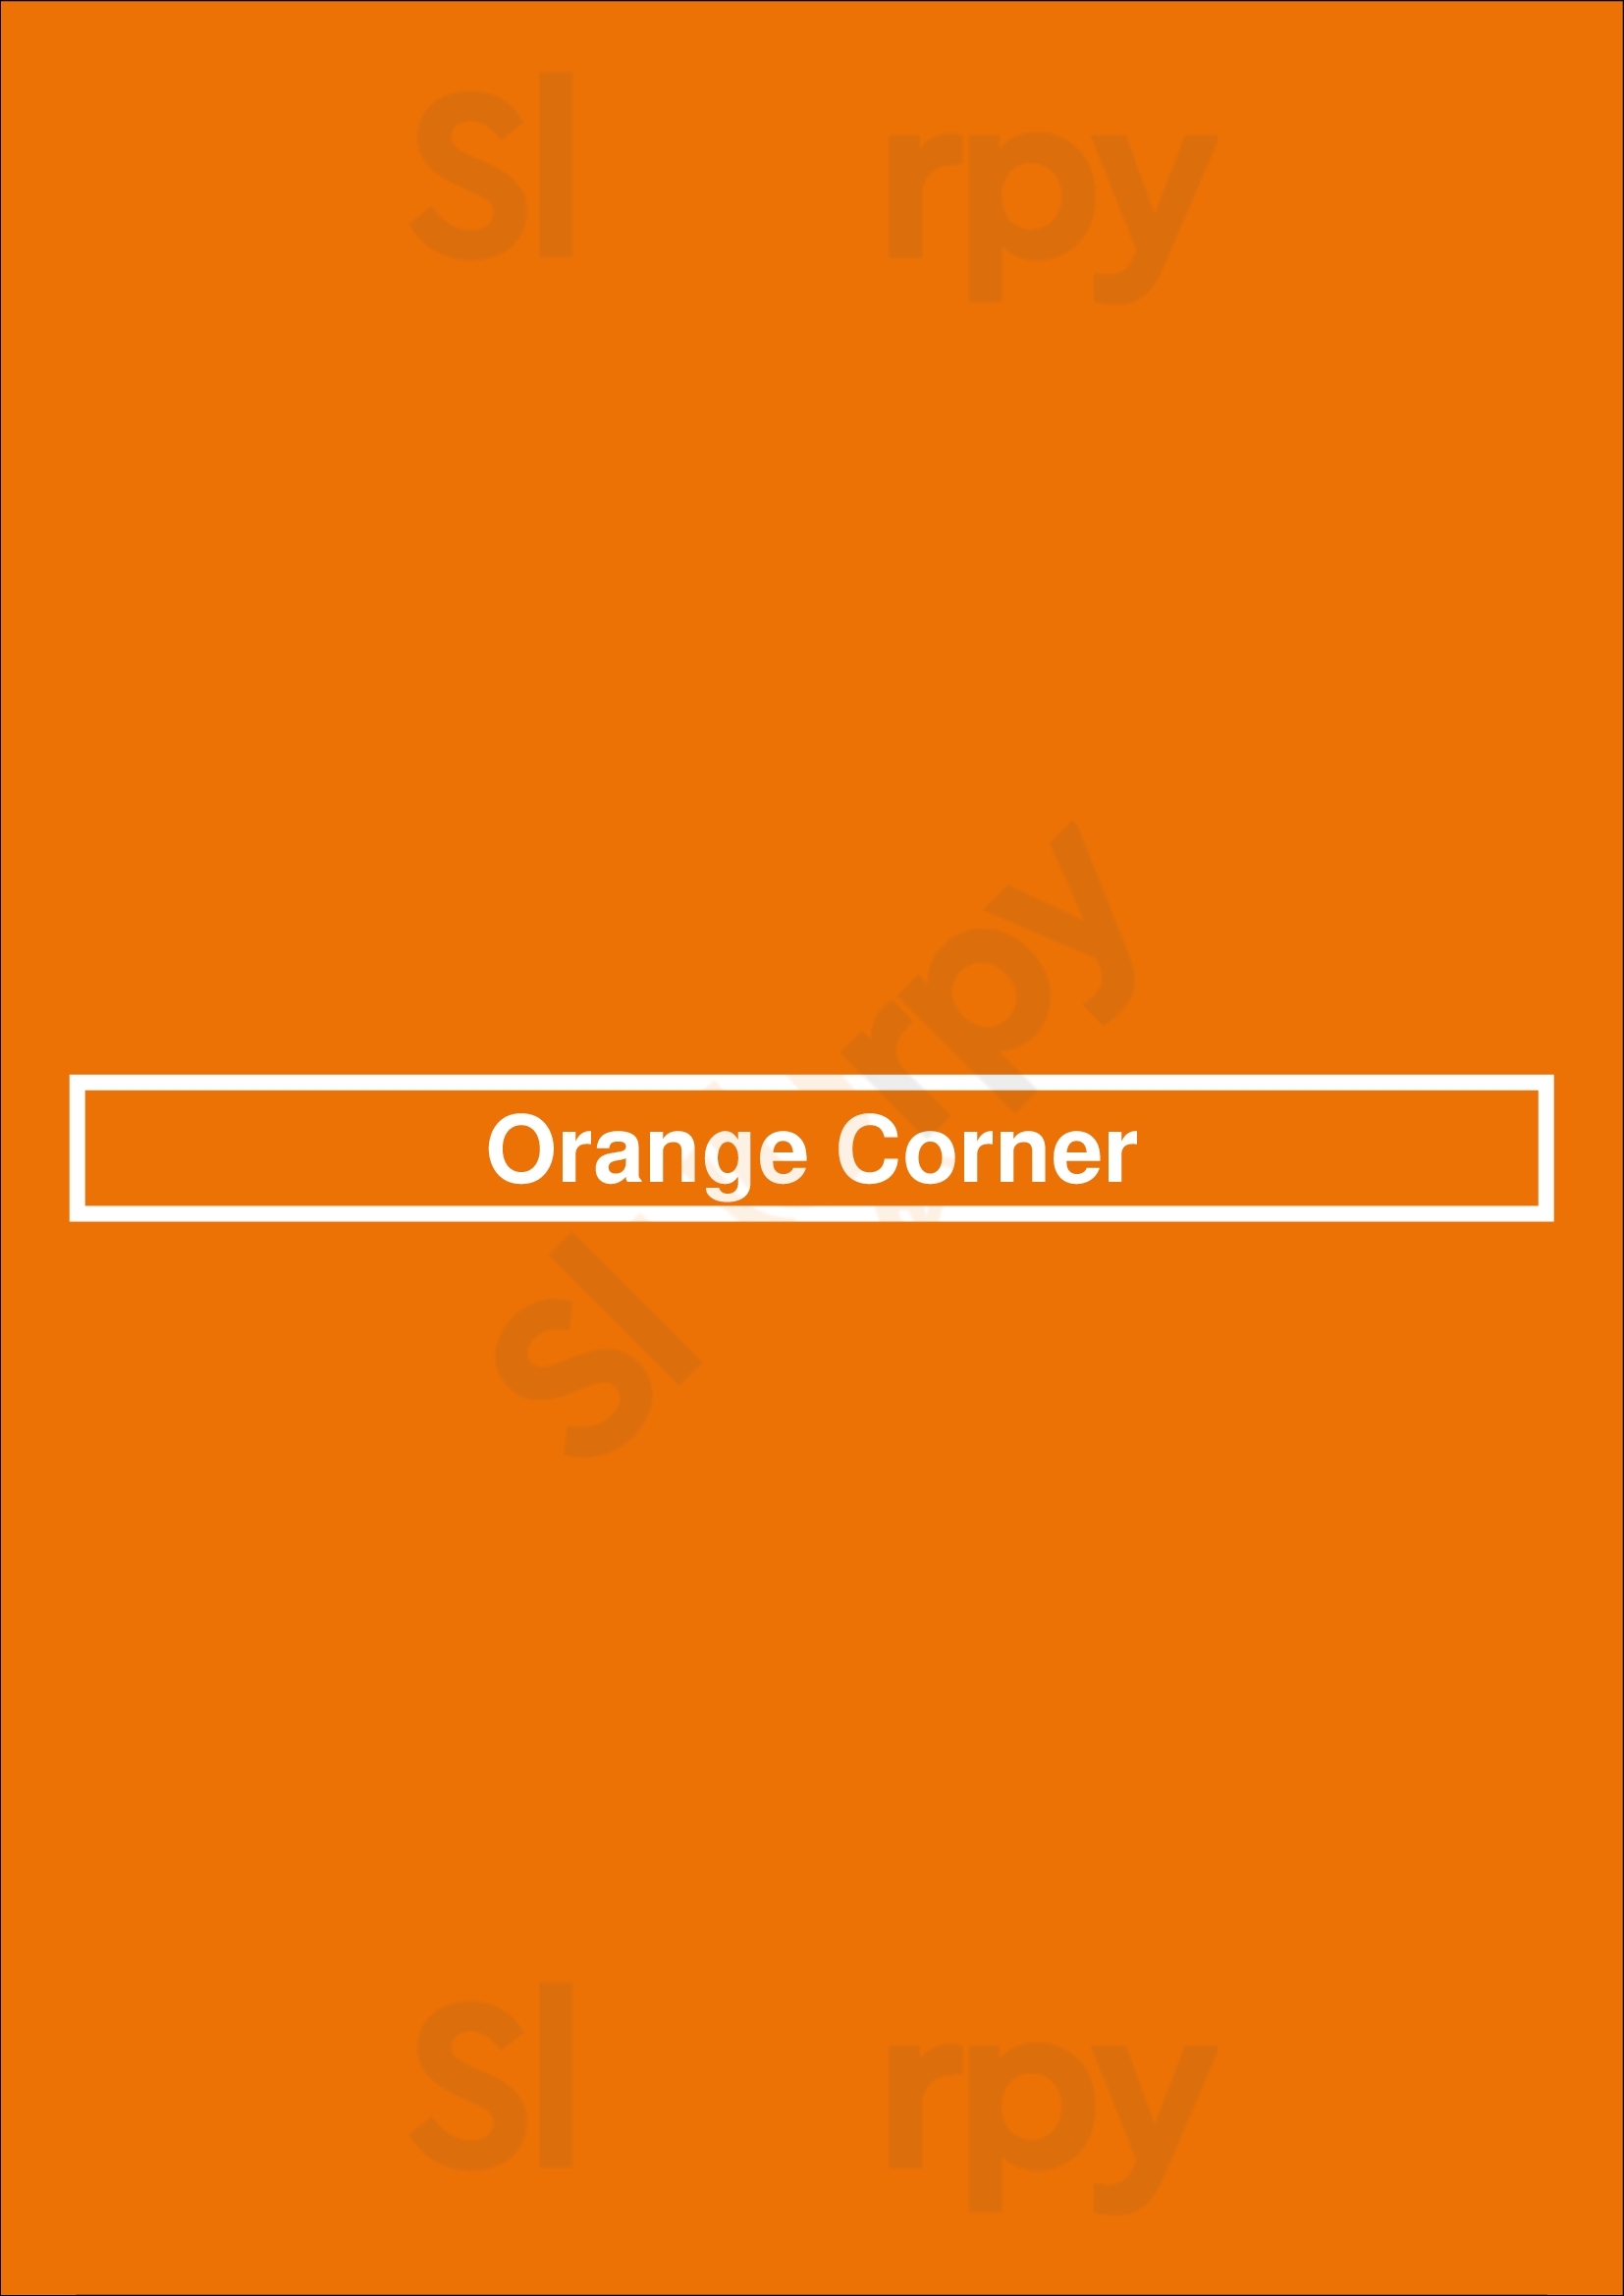 Orange Corner Vancouver Menu - 1